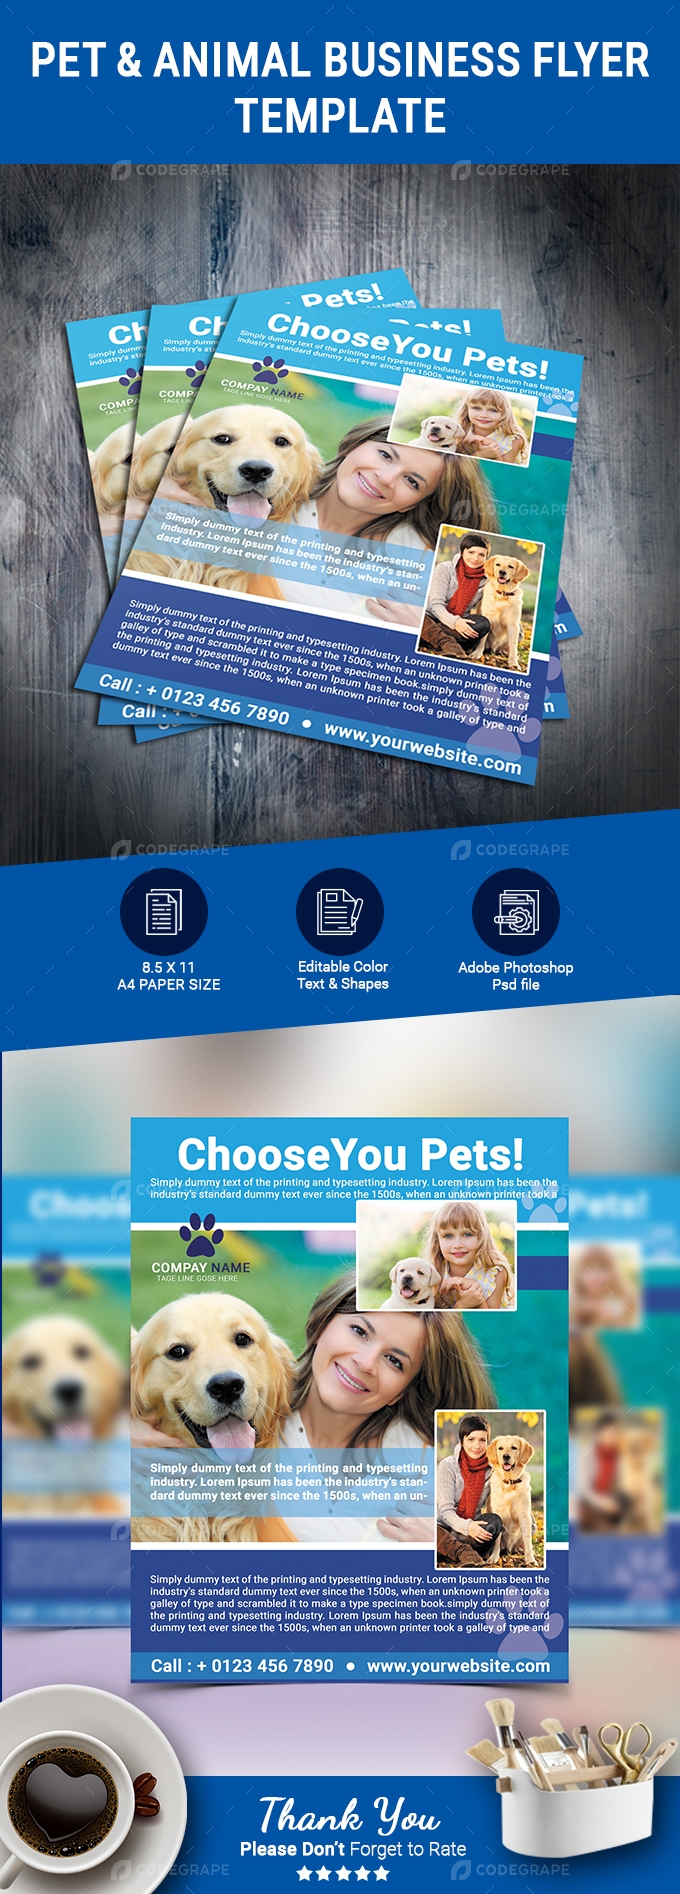 Pet & Animal Business Flyer